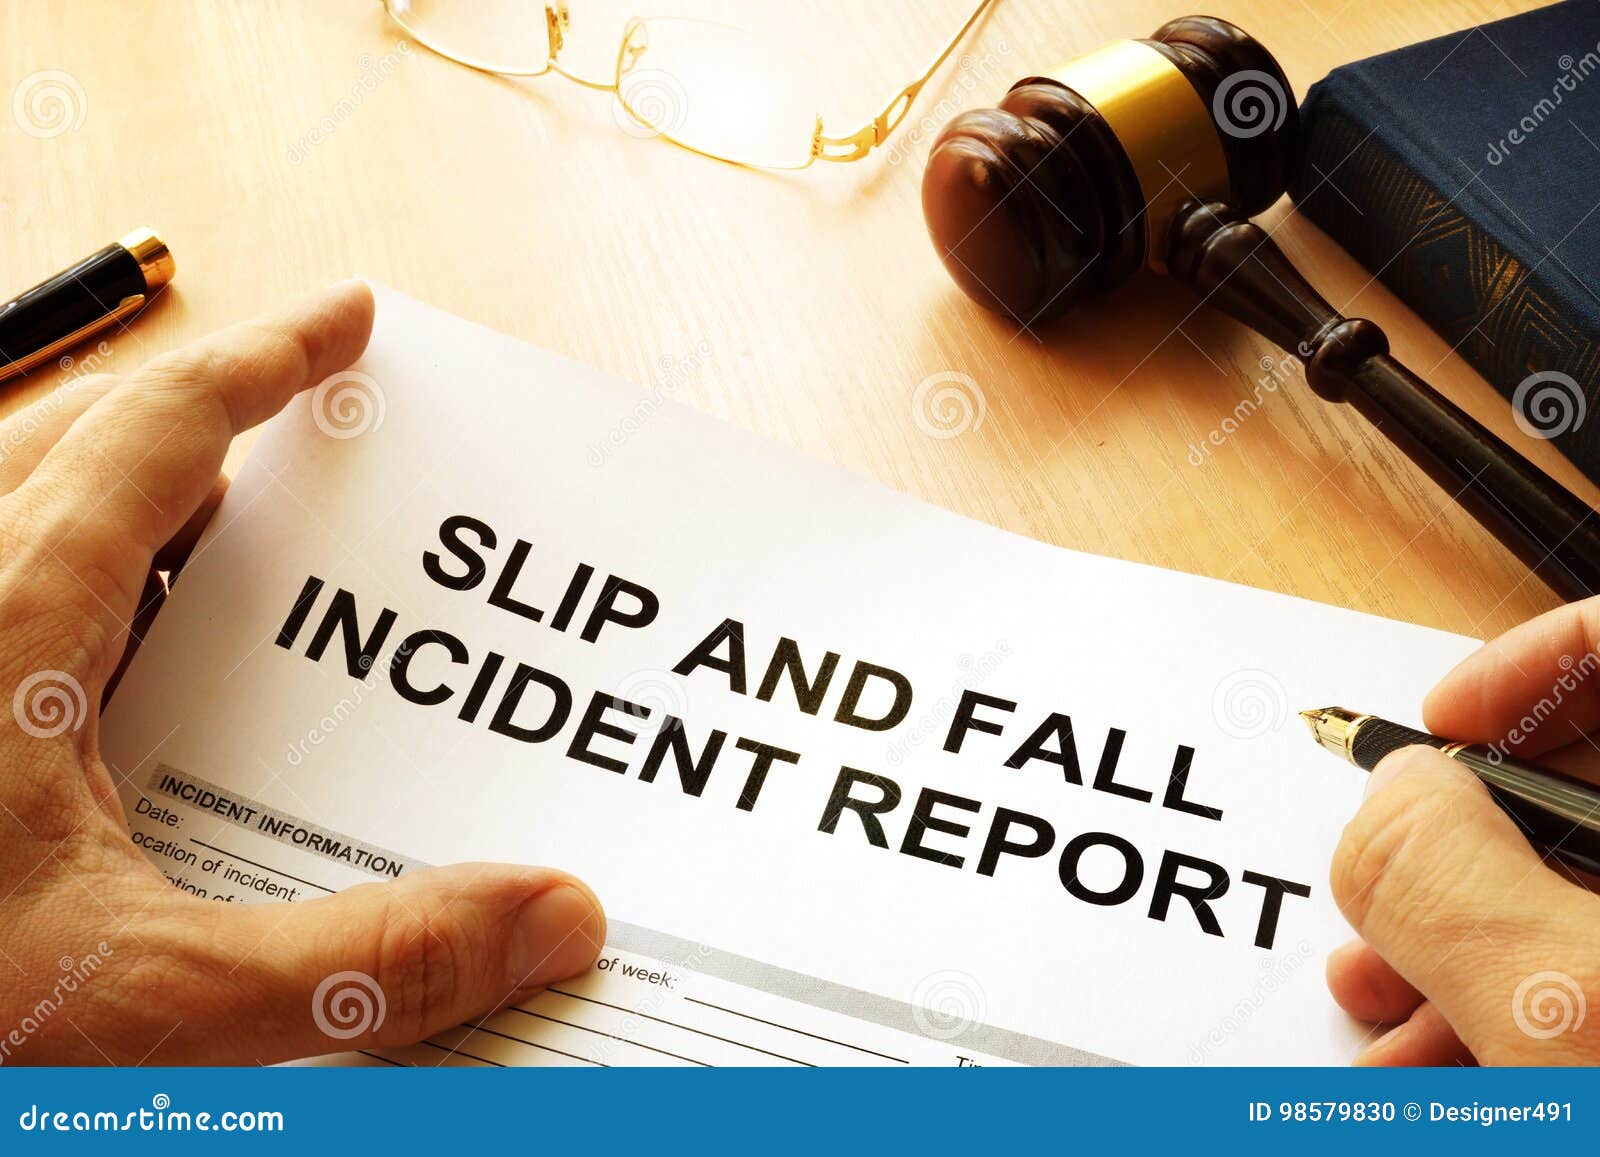 slip and fall injury report.